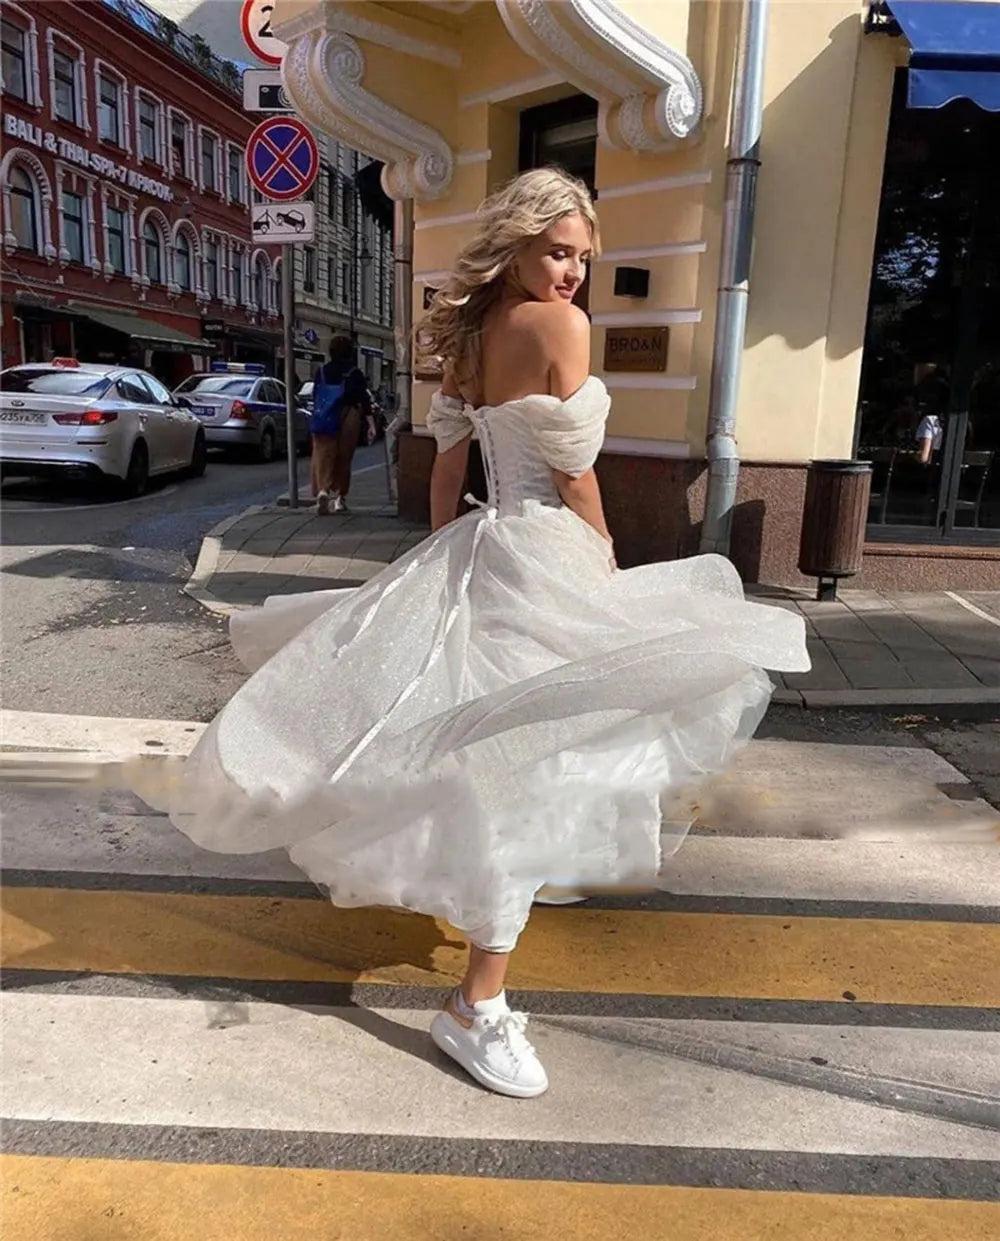 Glitter A Line Short Wedding Dress off the Shoulder Lengan Ankle Length Corset/Lace Up Back Bride Country Gaun Pengantin Vestidos